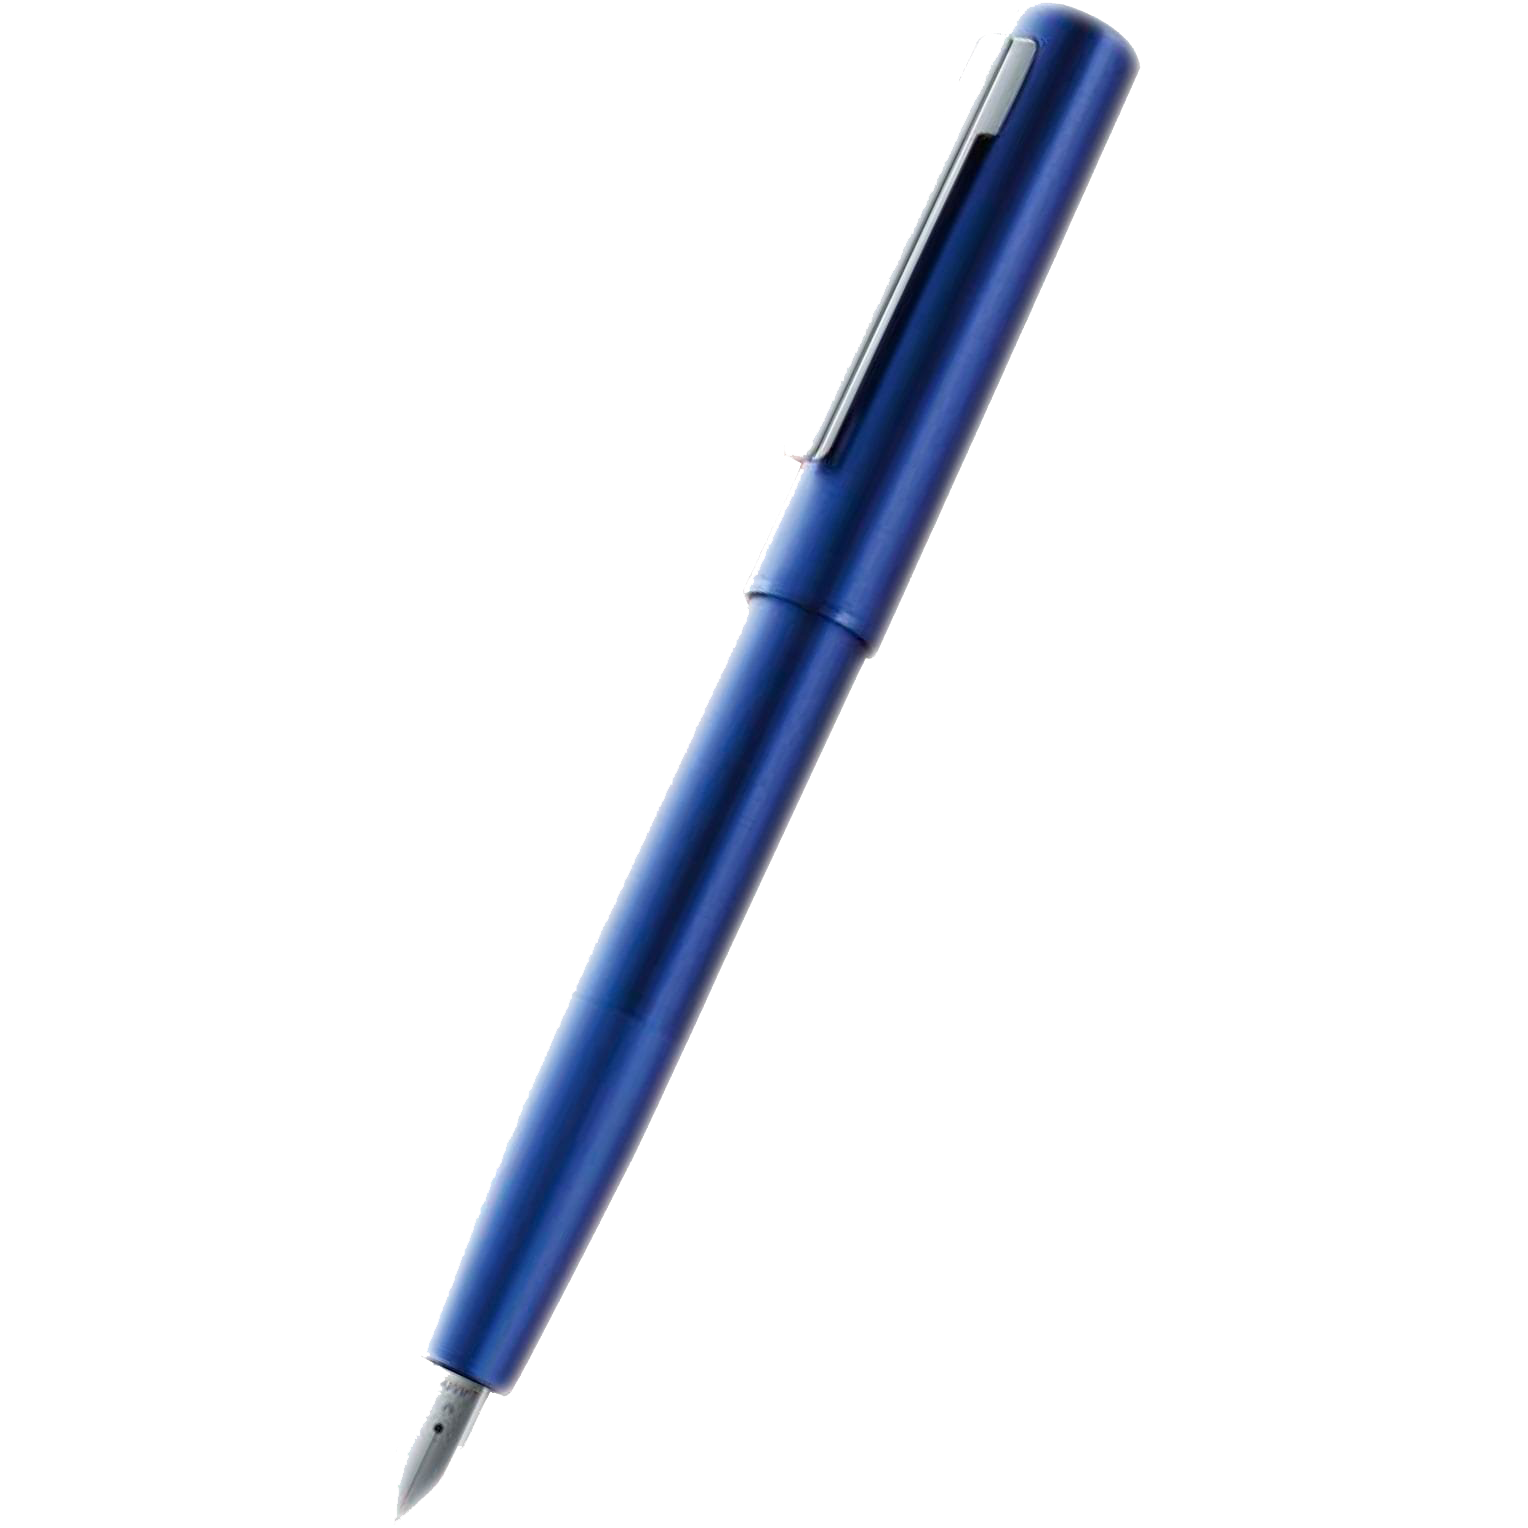 Blue pen png I -download ang imahe